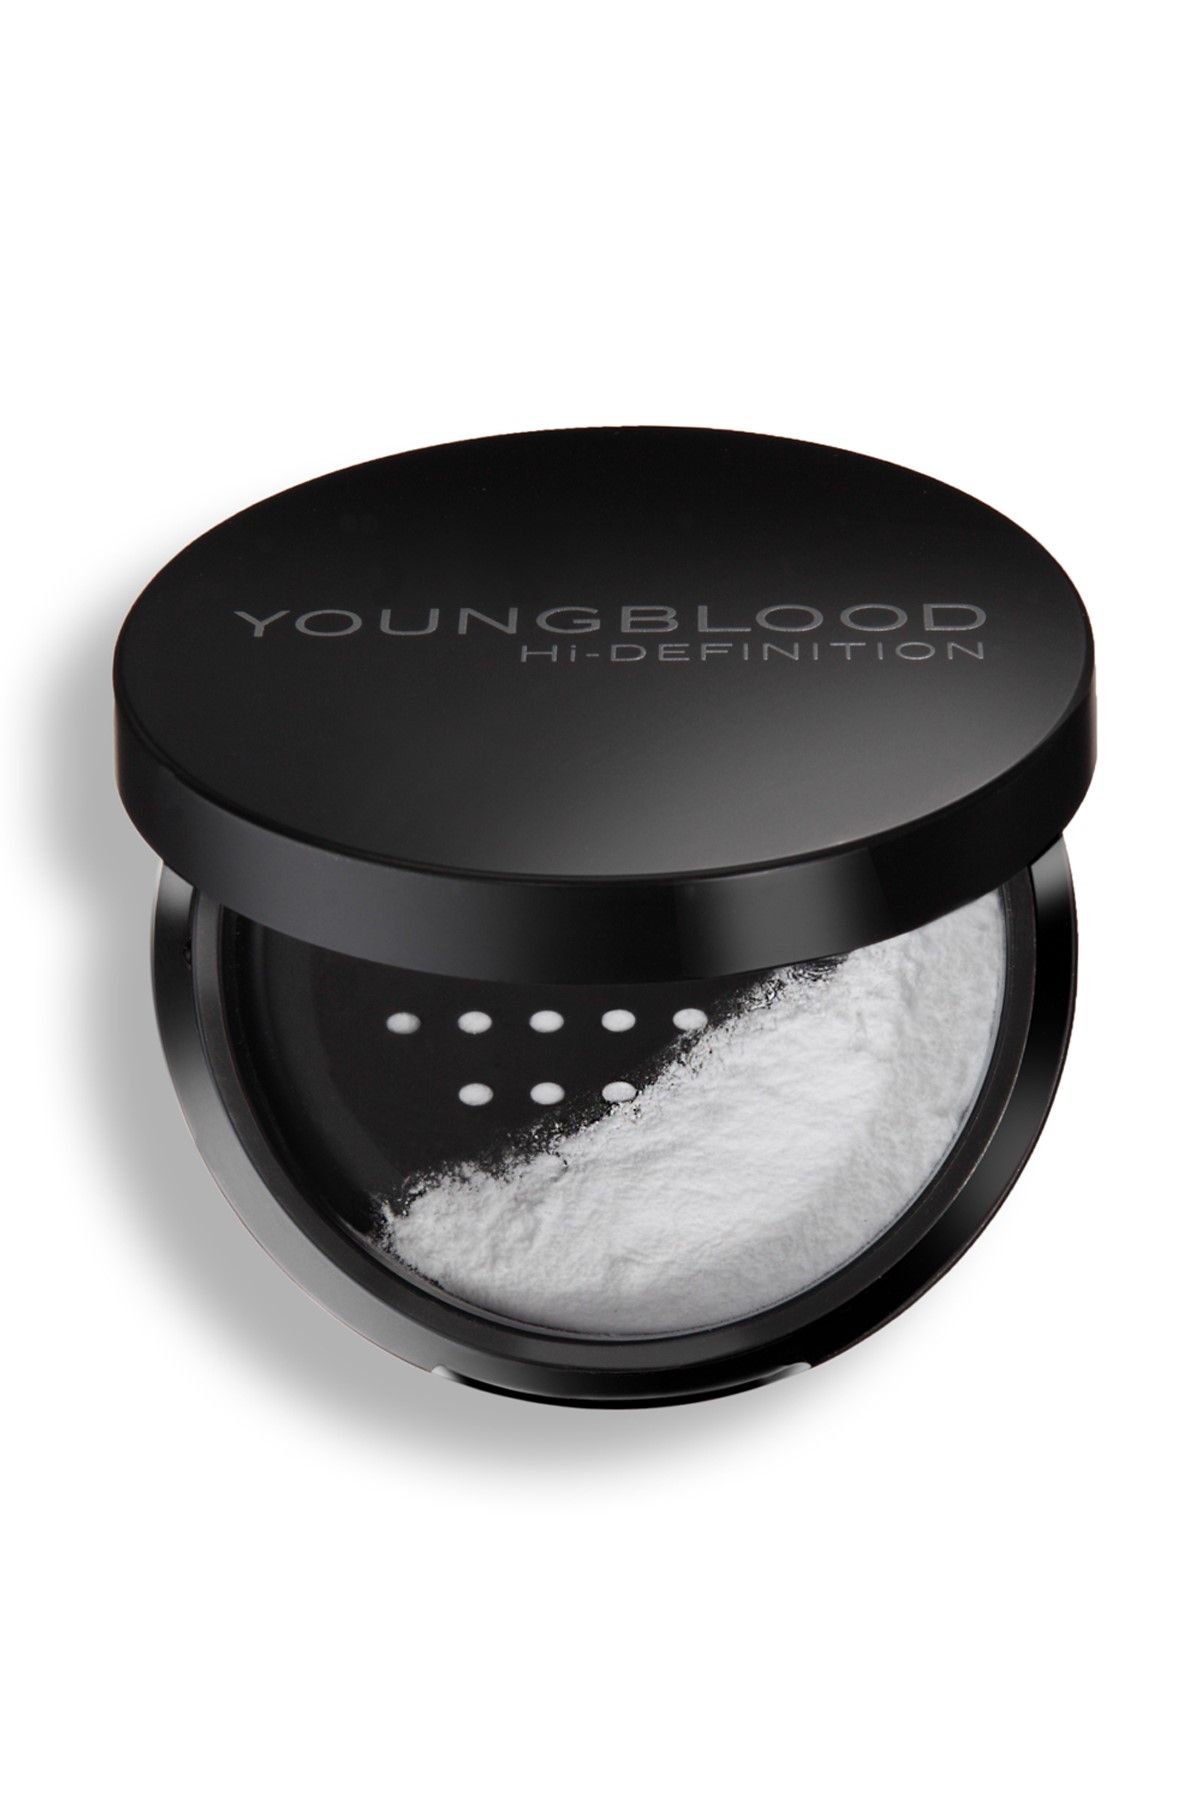 Youngblood Hi-Definition Hydrating Mineral Powder - Transparan Sabitleştirici Pudra 10gr 696137207117